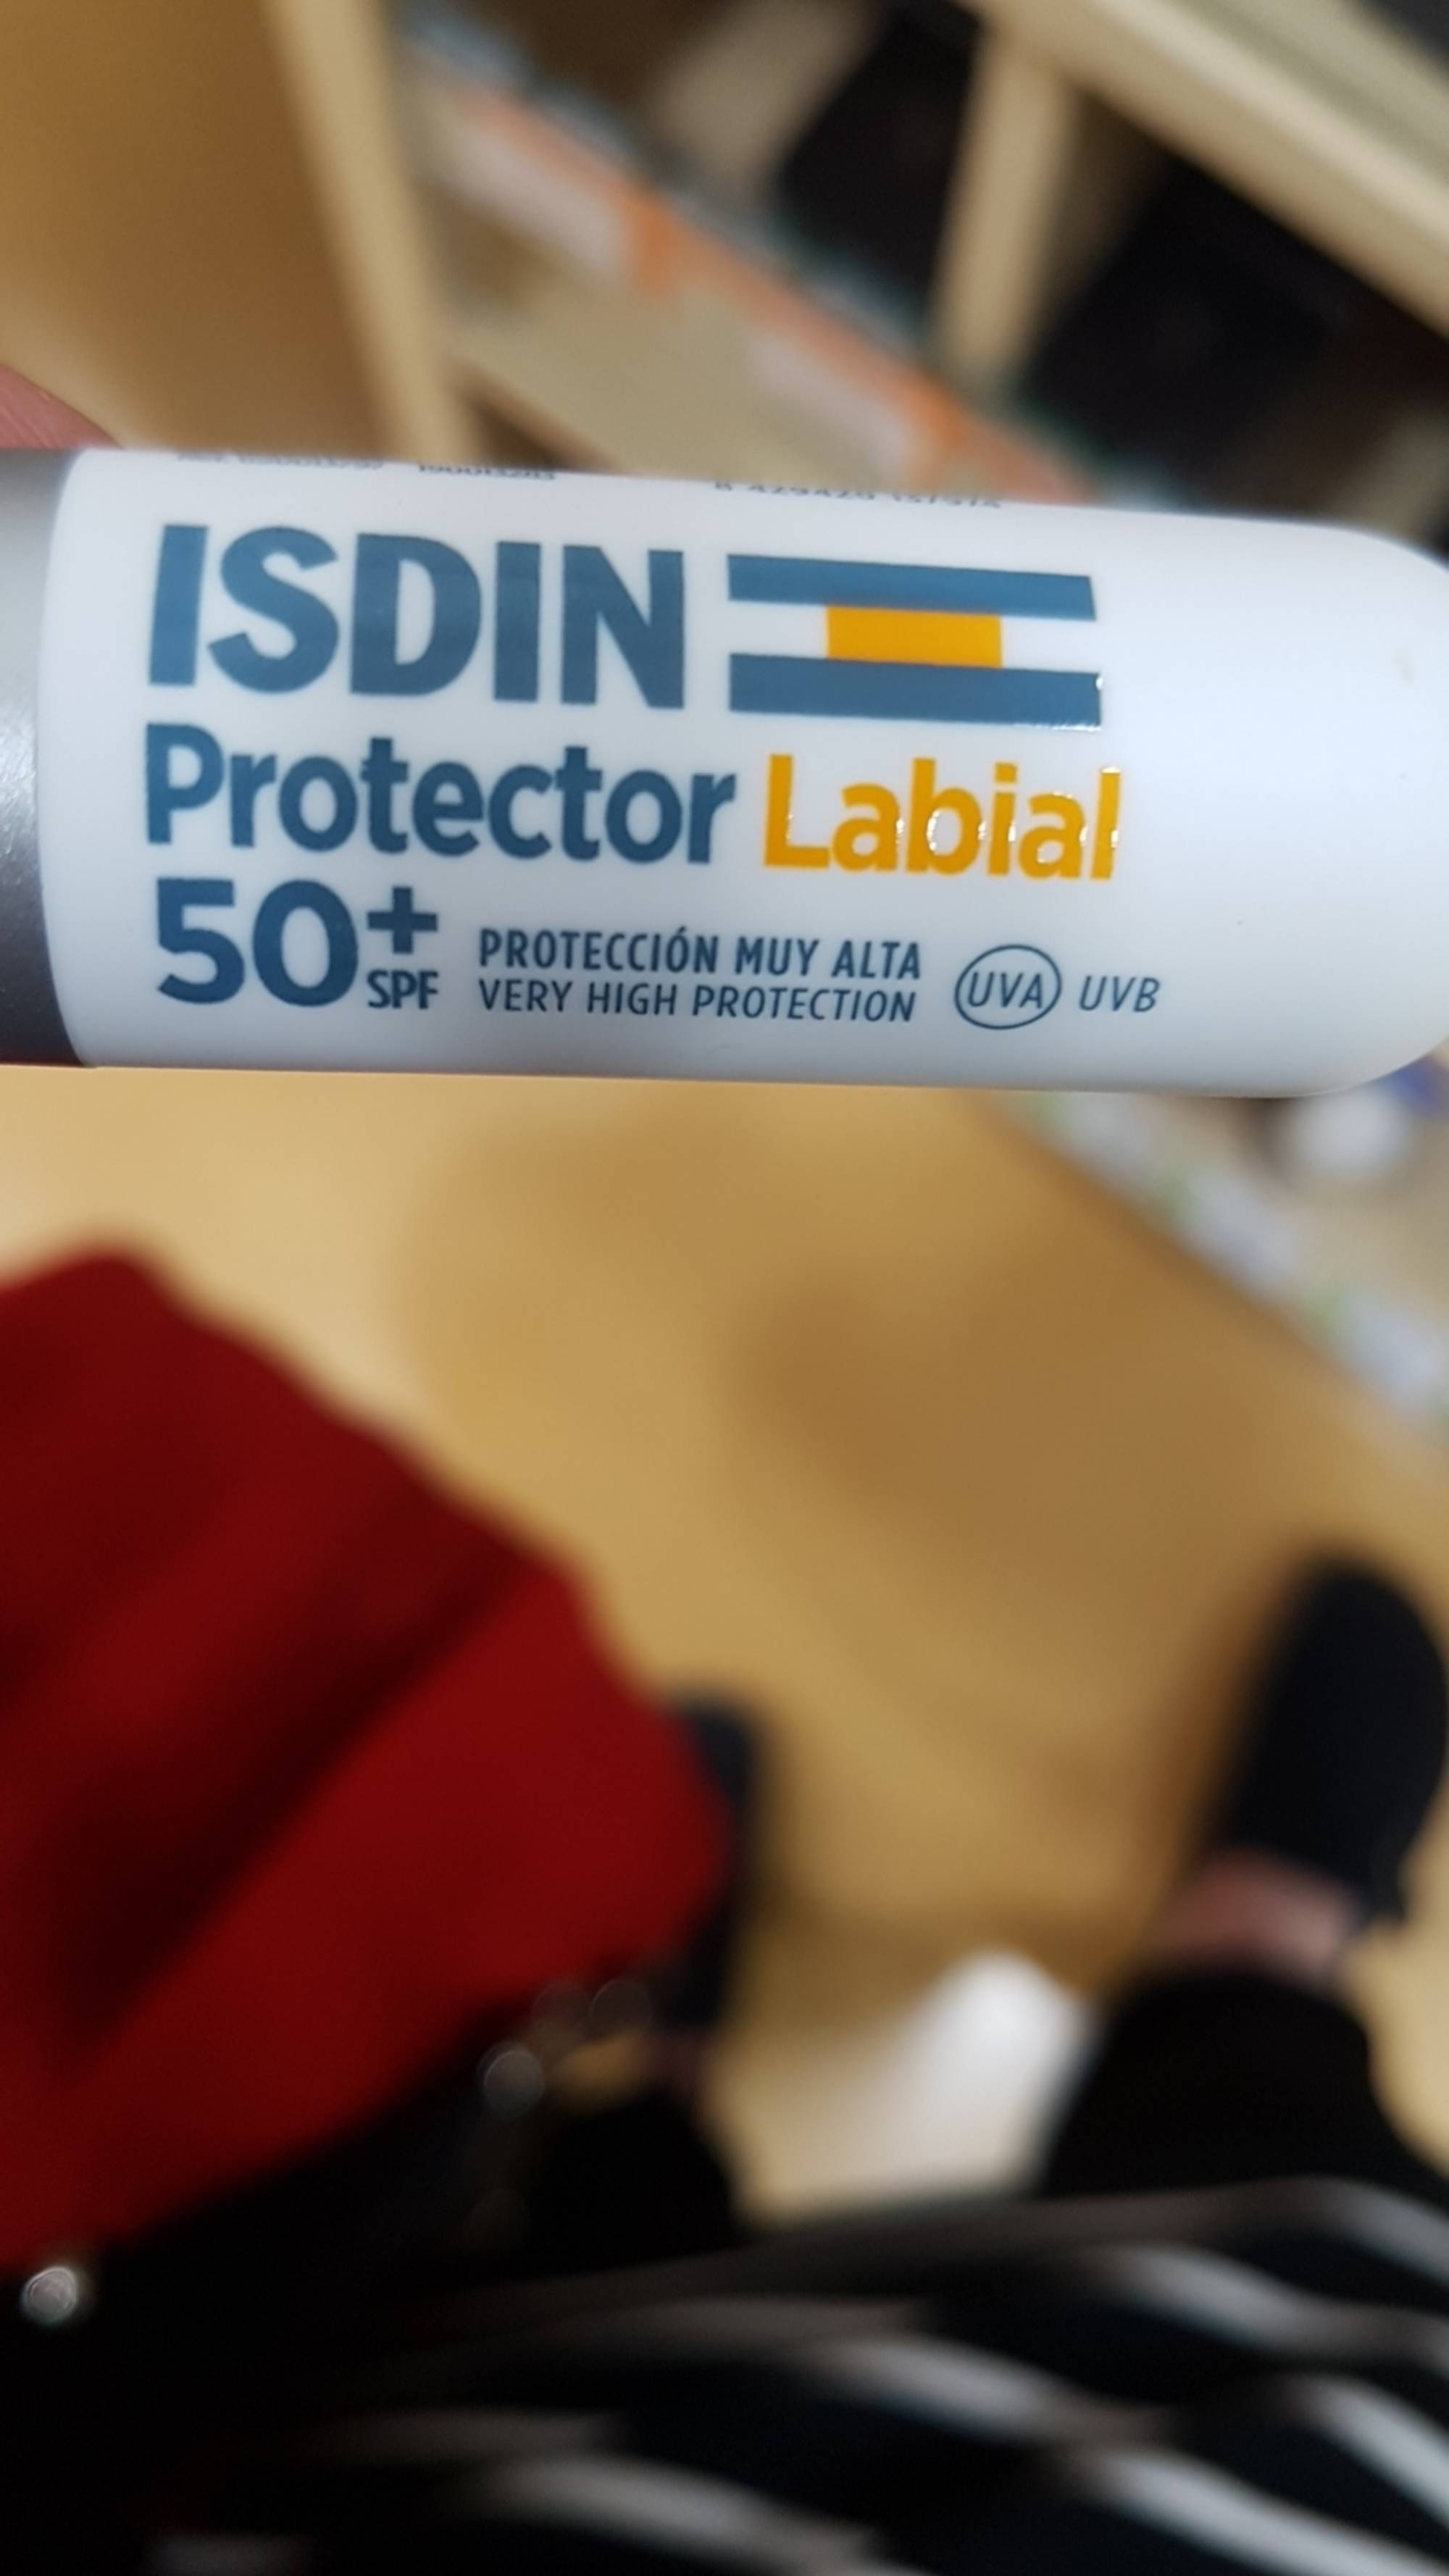 Isdin protector labial spf 50+